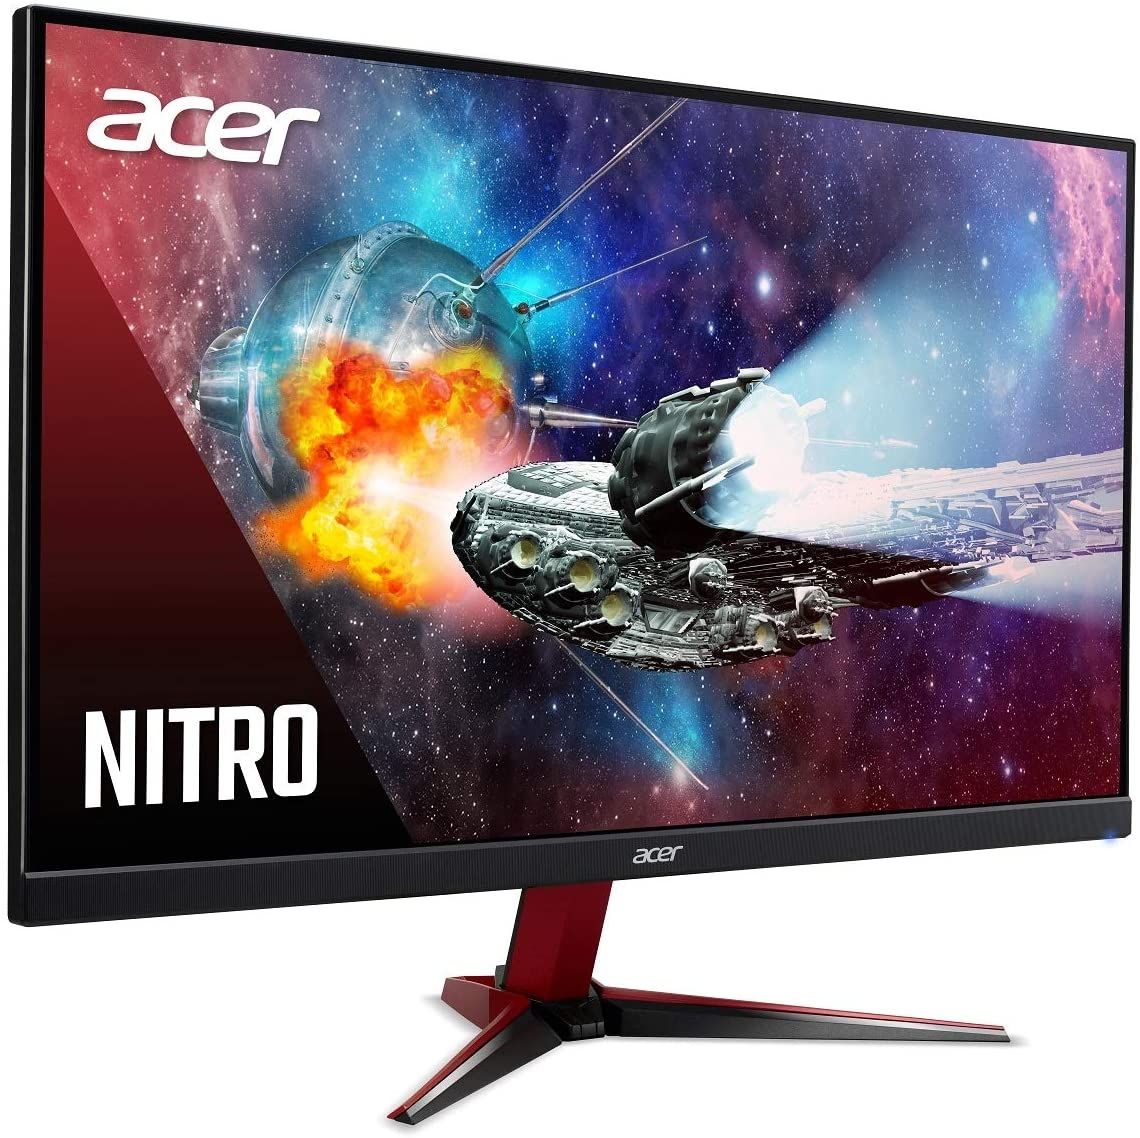 Acer Nitro VG270K front